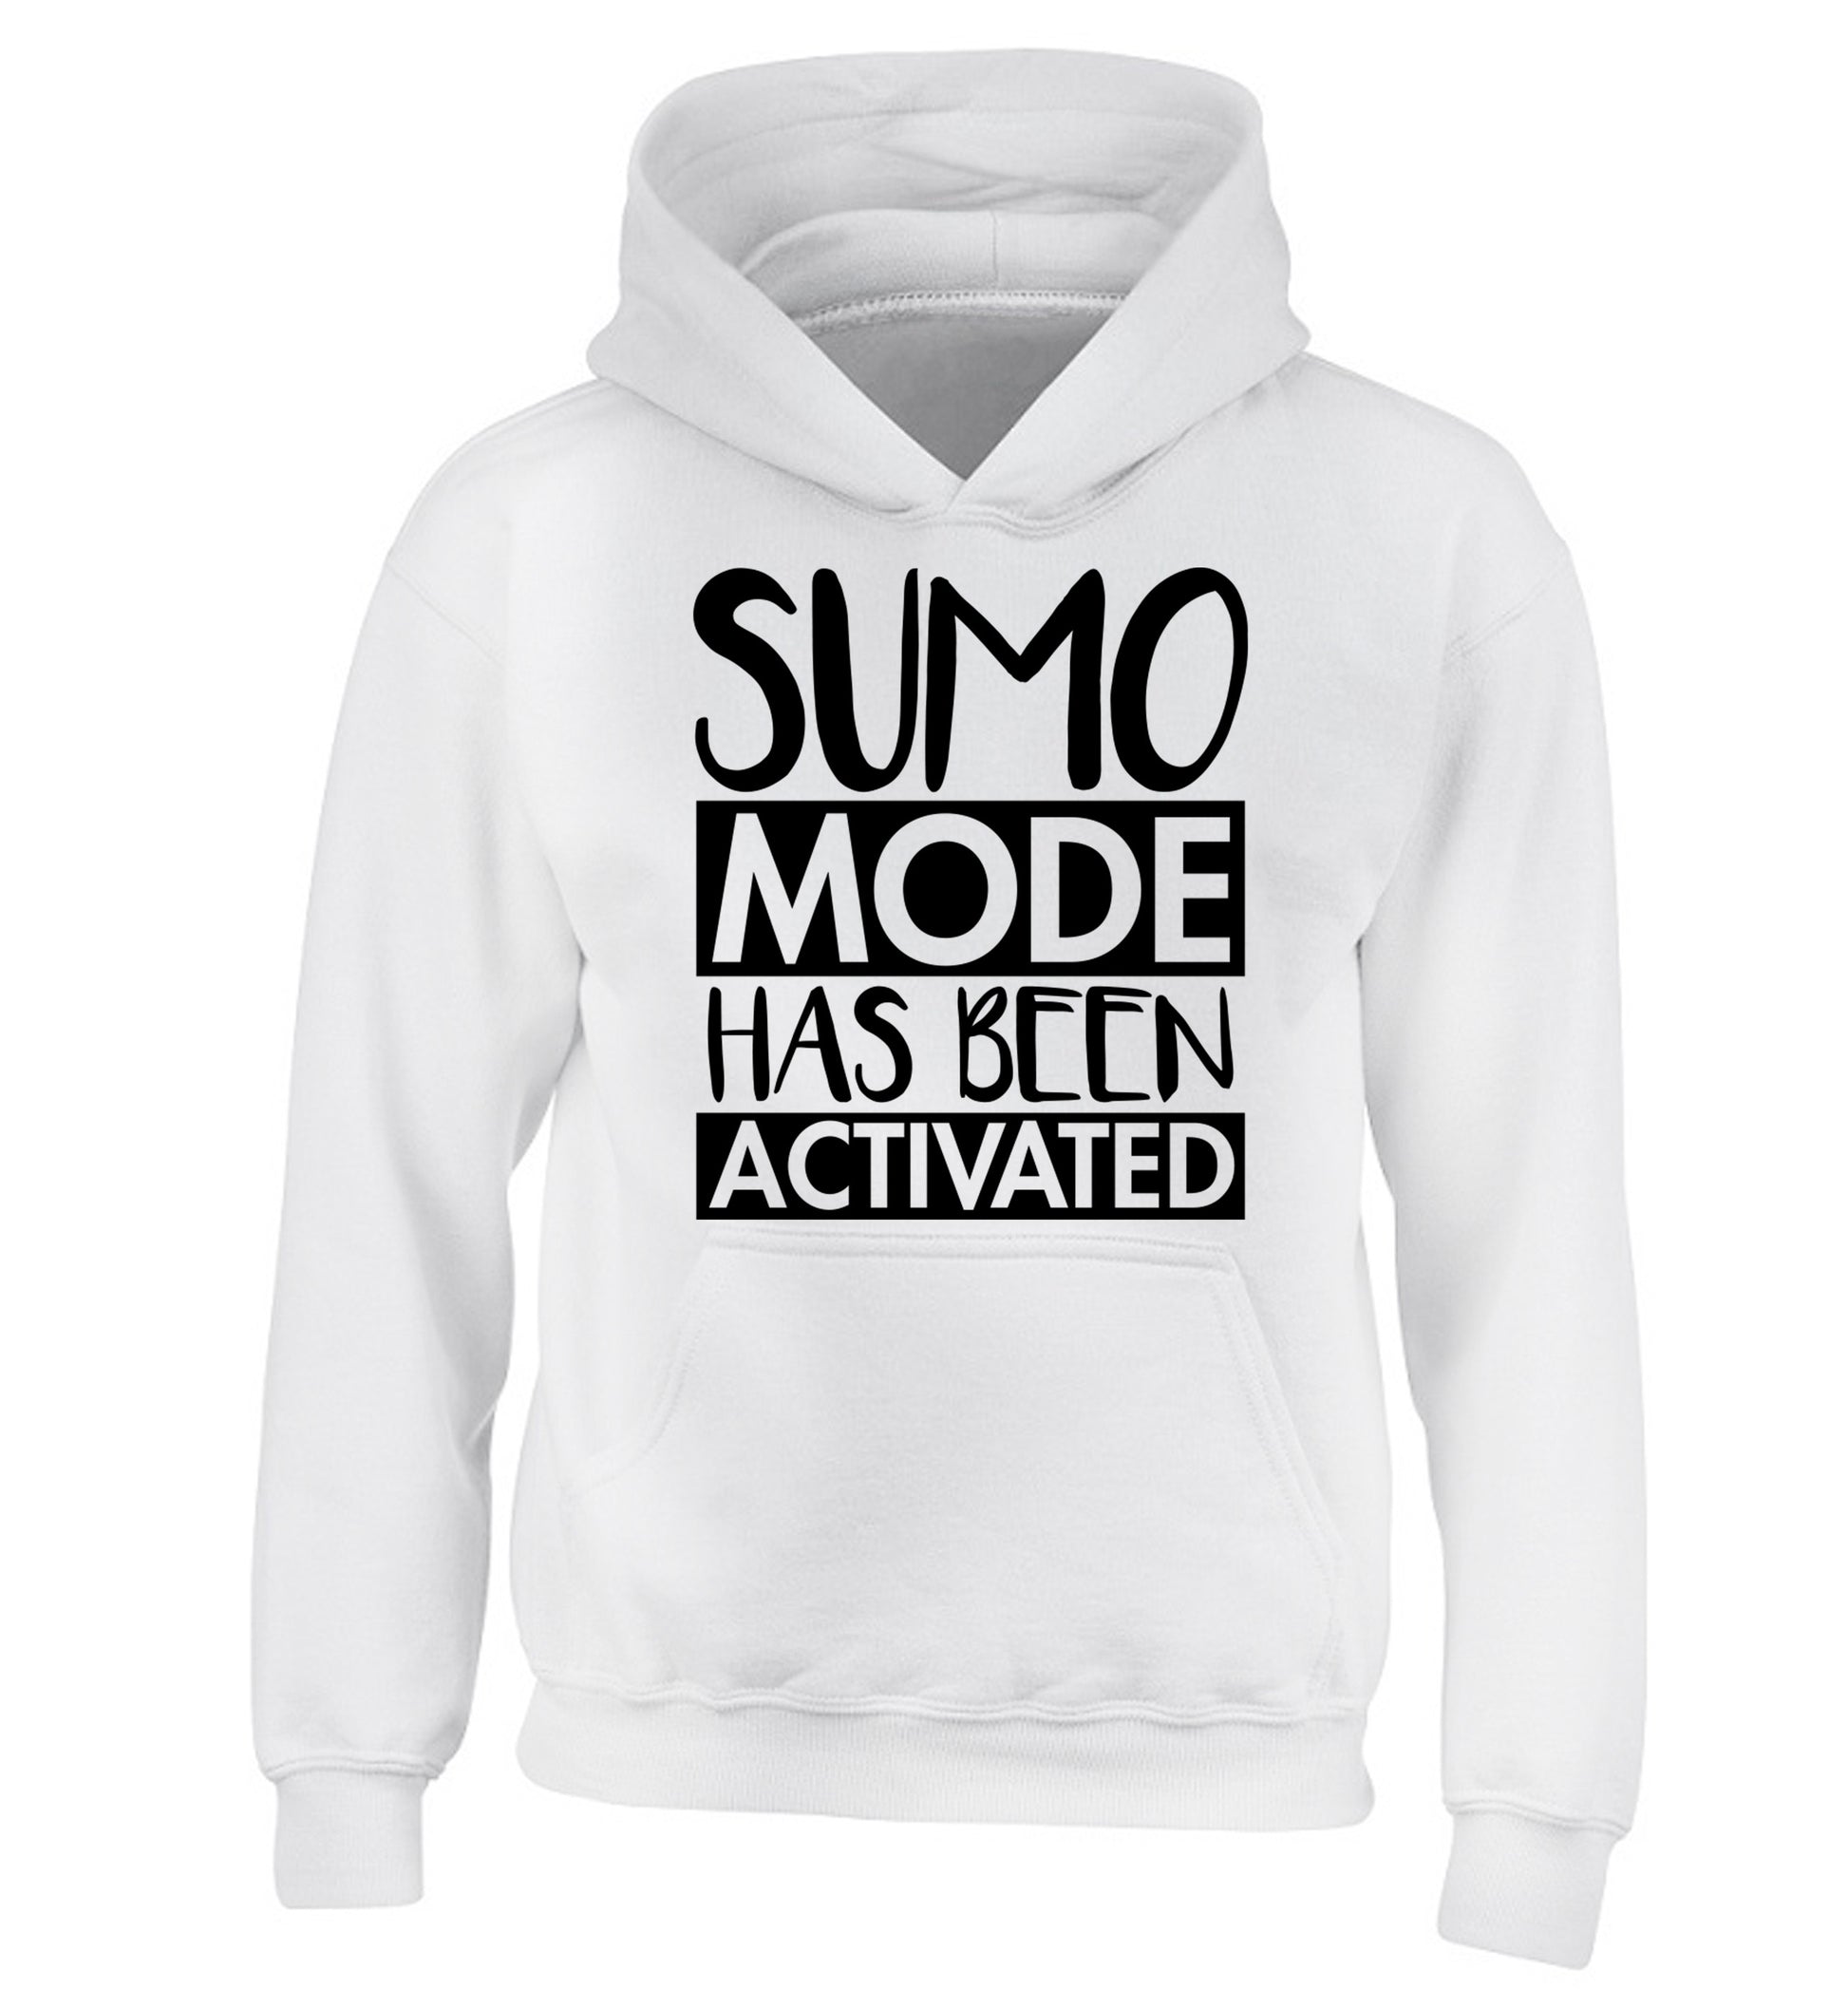 Sumo mode activated children's white hoodie 12-14 Years